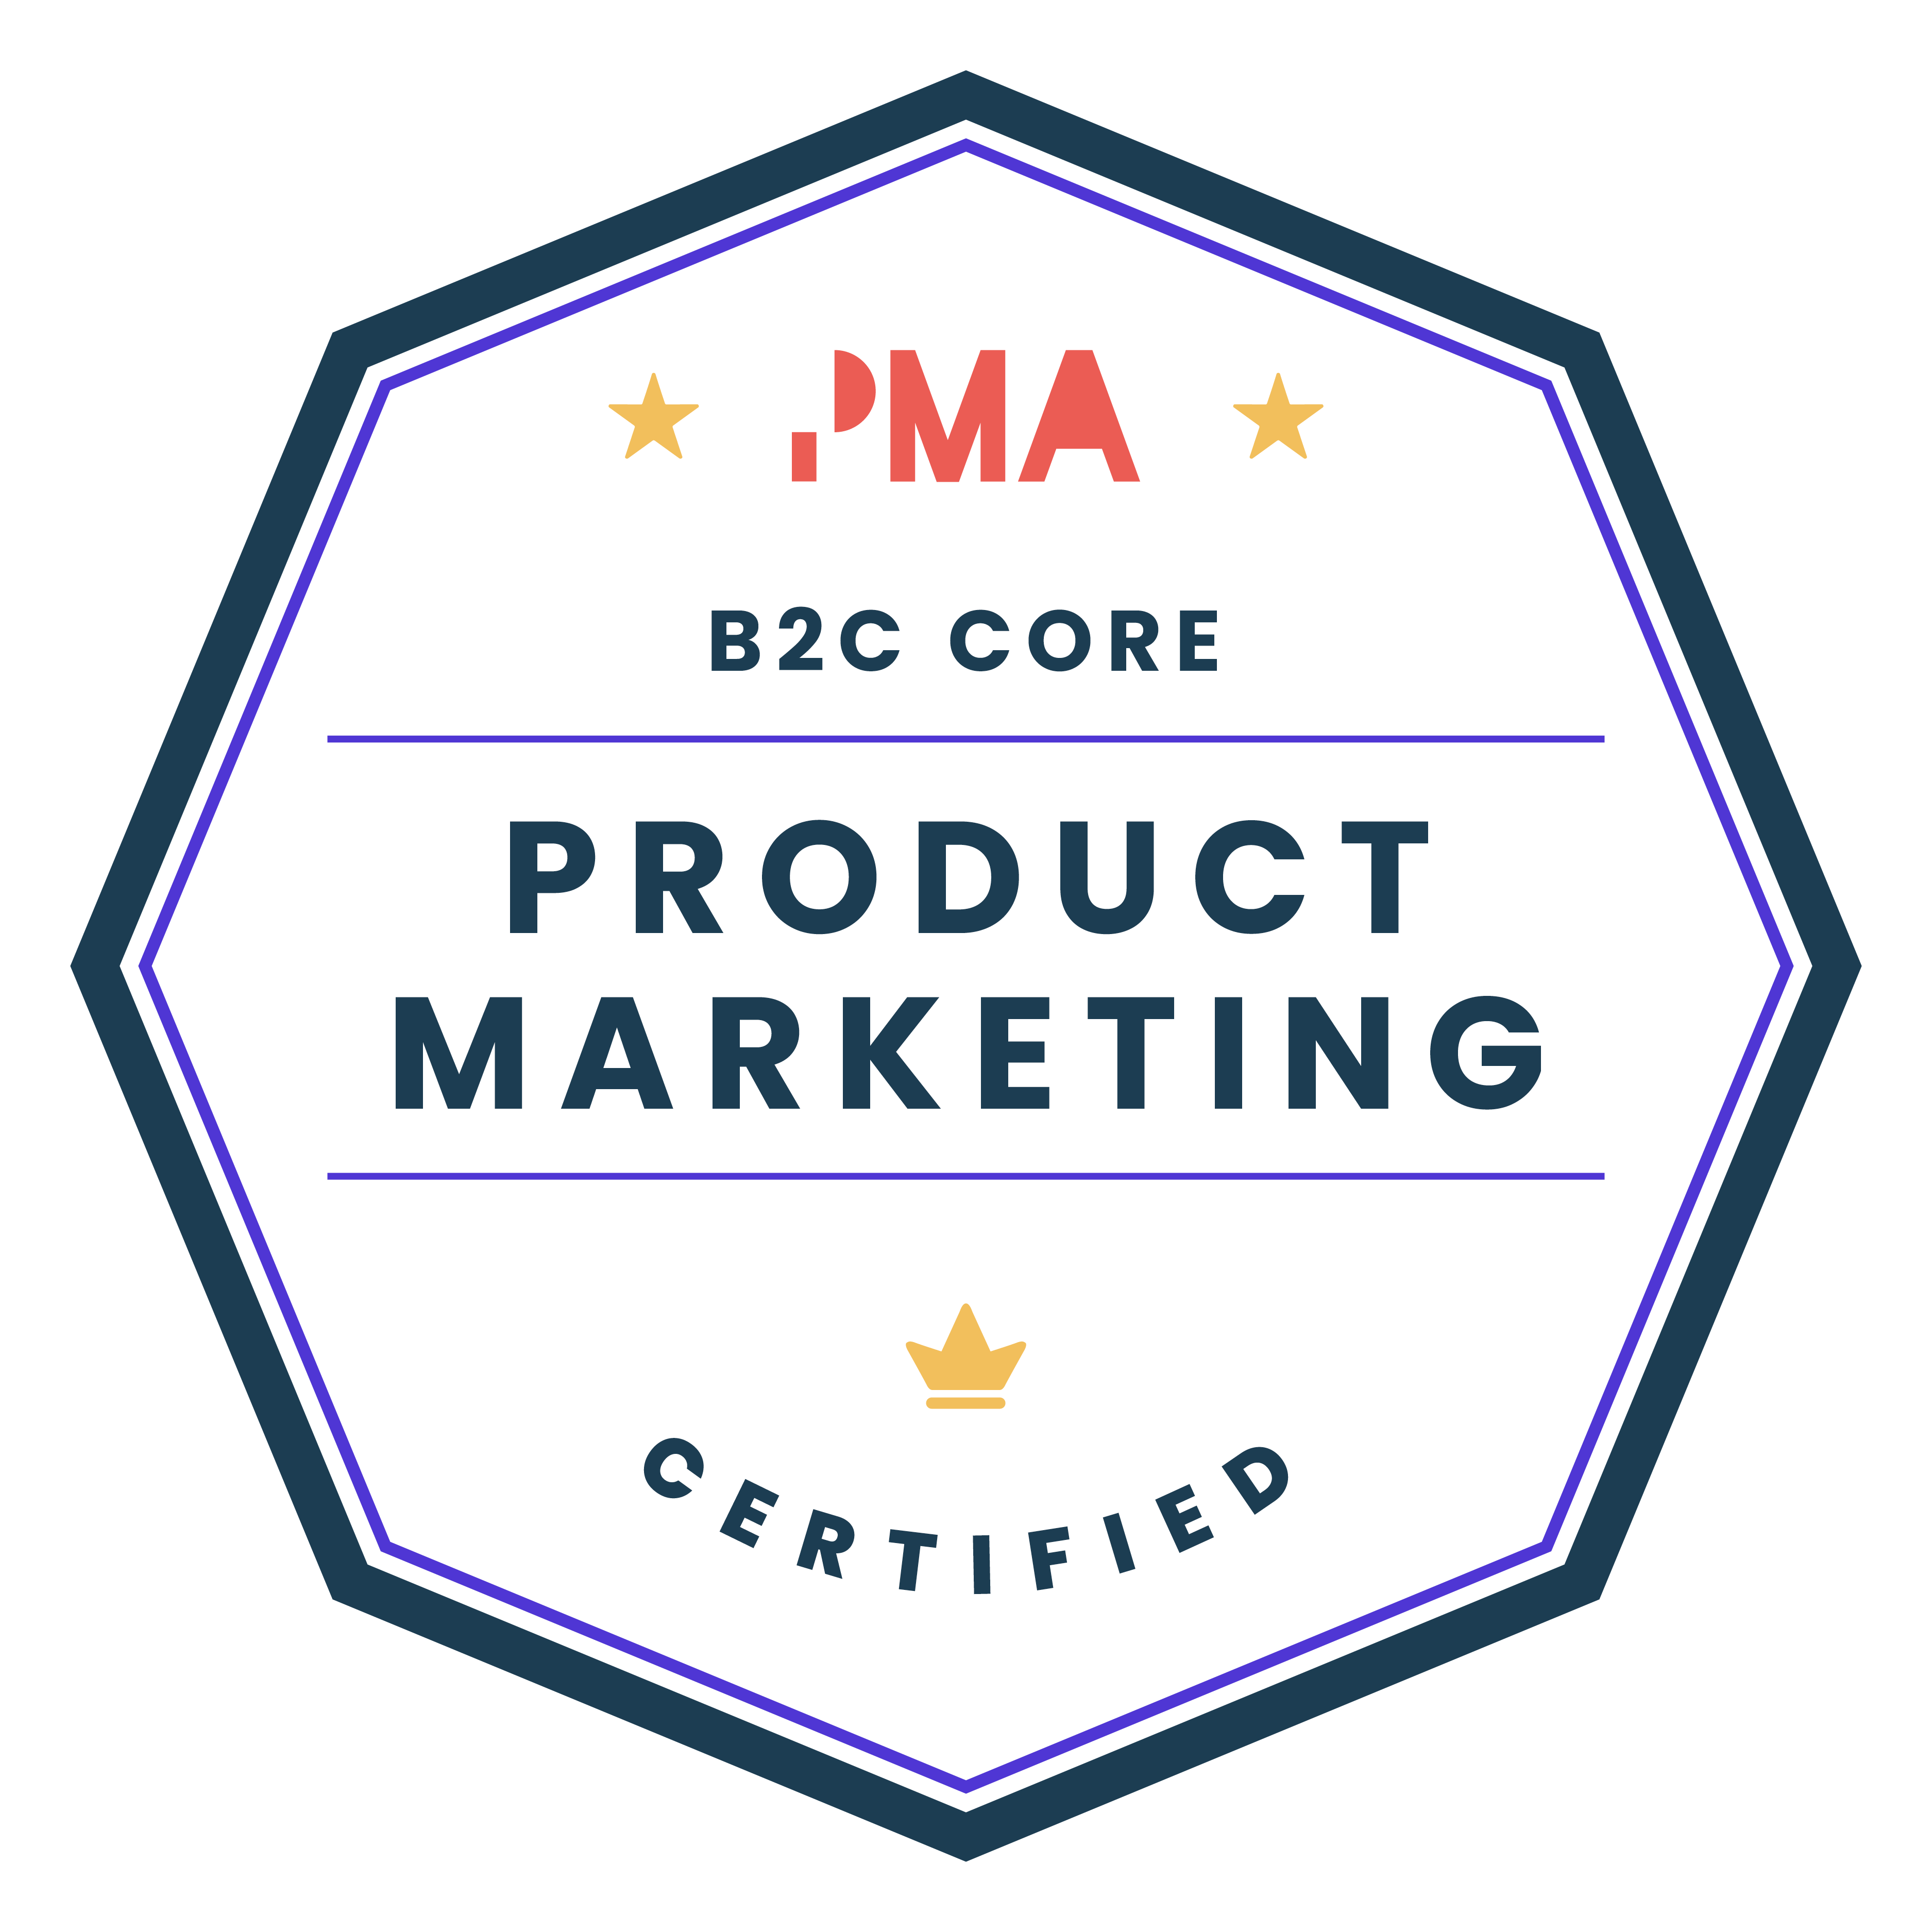 Product Marketing Certified: B2C Core logo